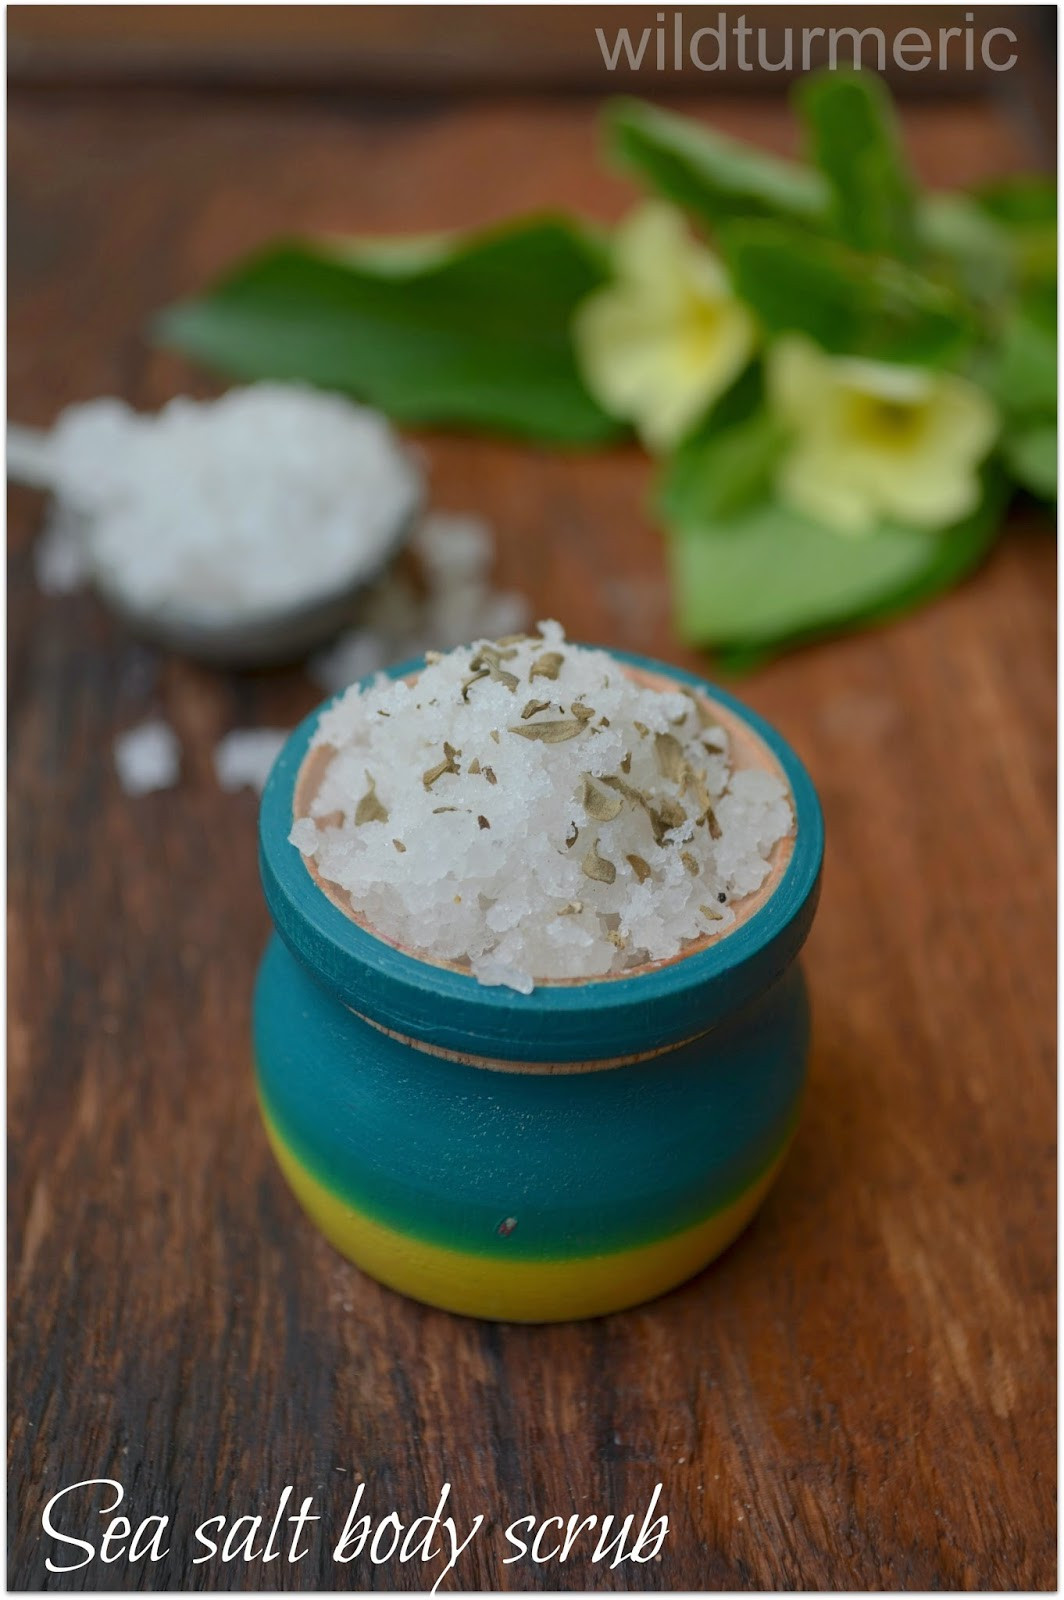 Best ideas about DIY Salt Scrub
. Save or Pin DIY Homemade Salt Scrub Recipe for Face Hands Feet Now.